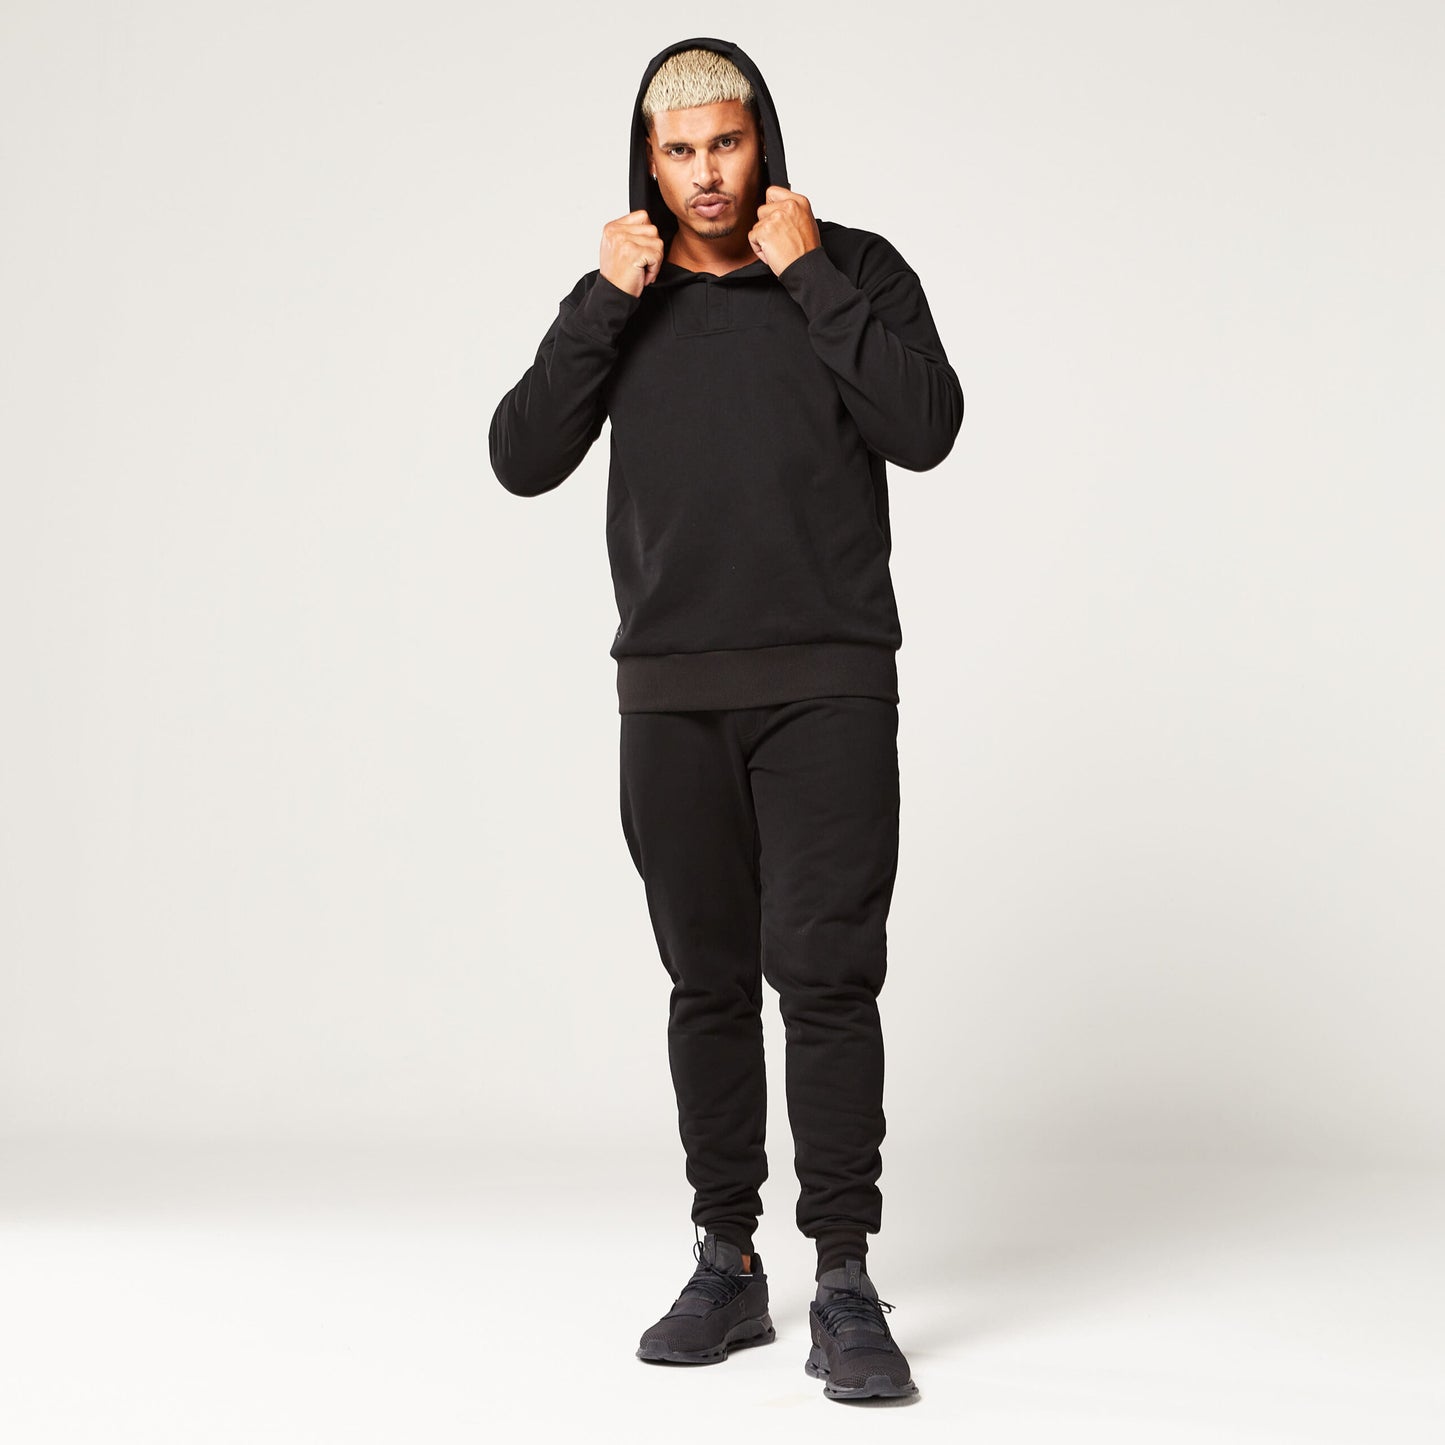 squatwolf-gym-wear-code-urban-hoodie-black-workout-hoodies-for-men